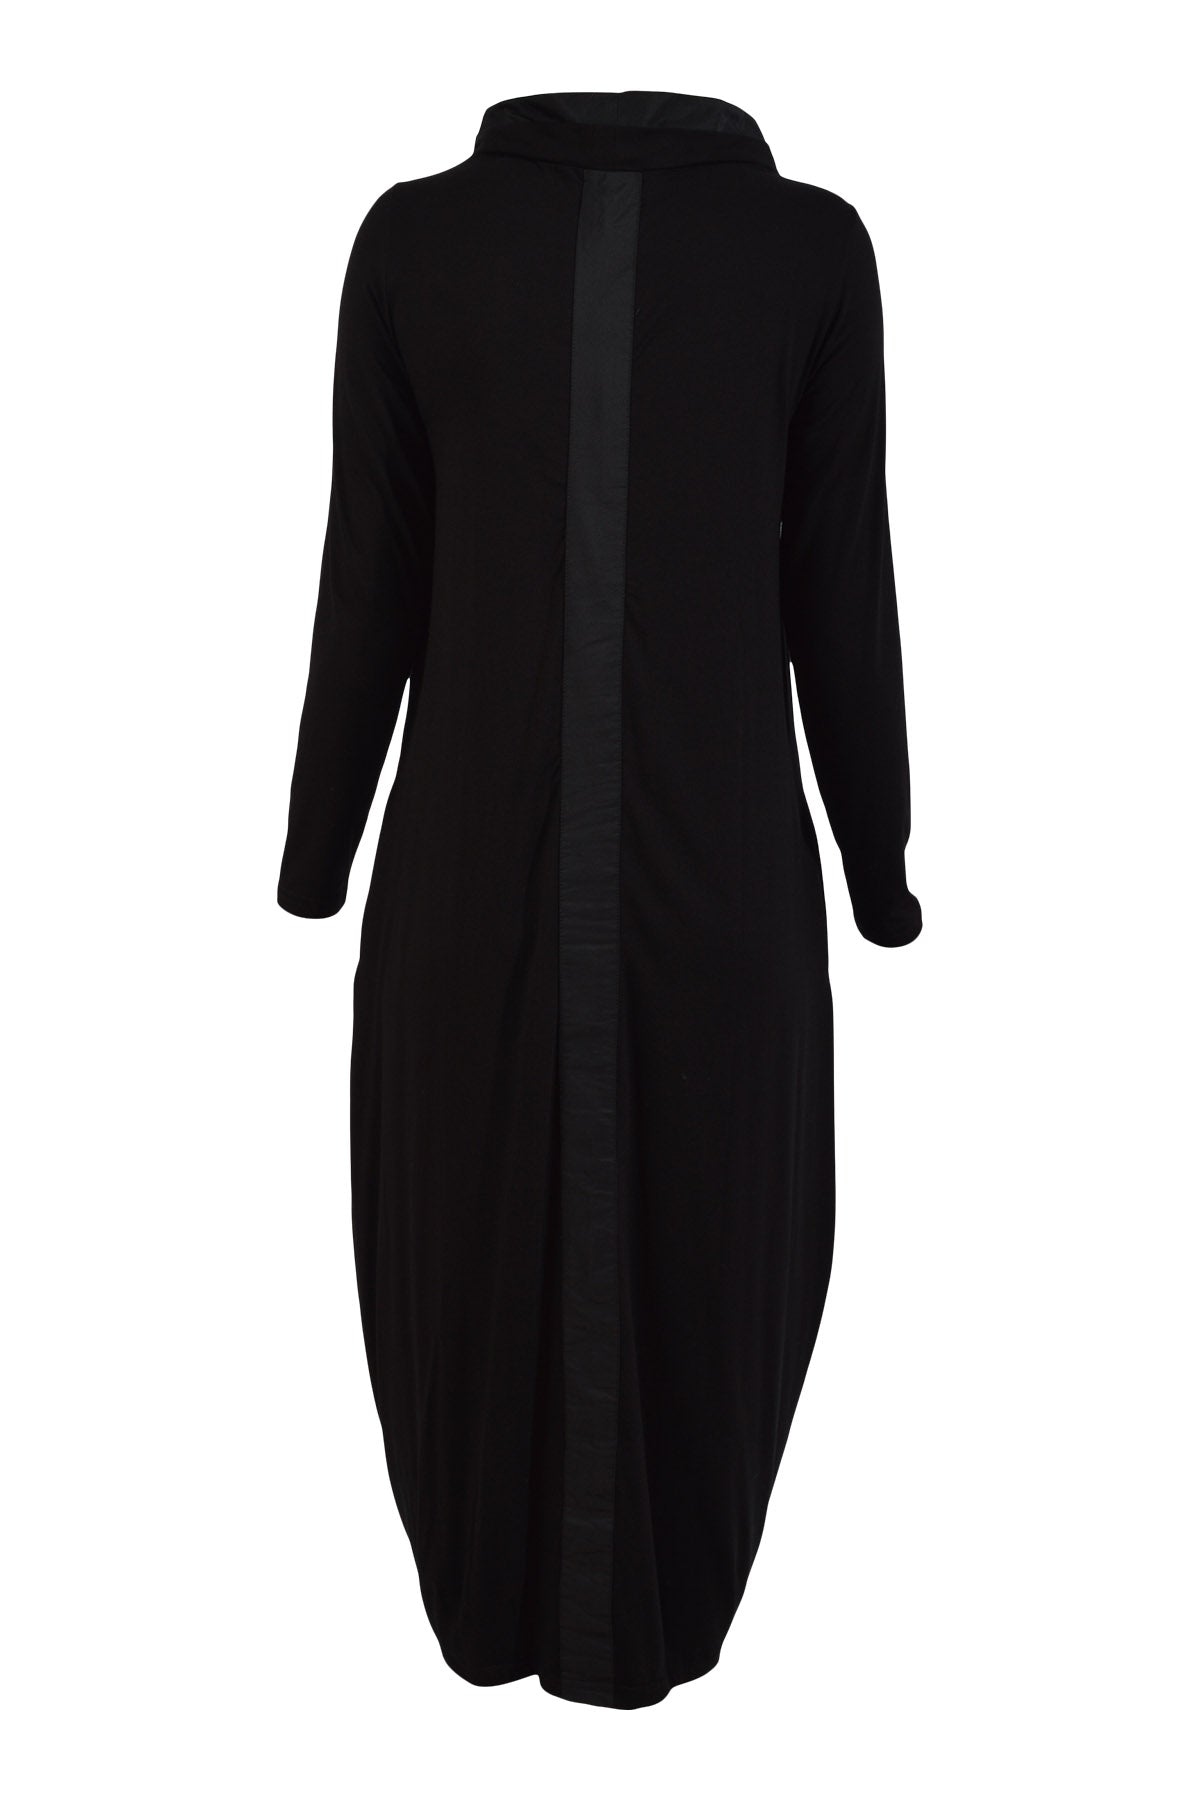 My Soul Stain Dress 5016, Black plain